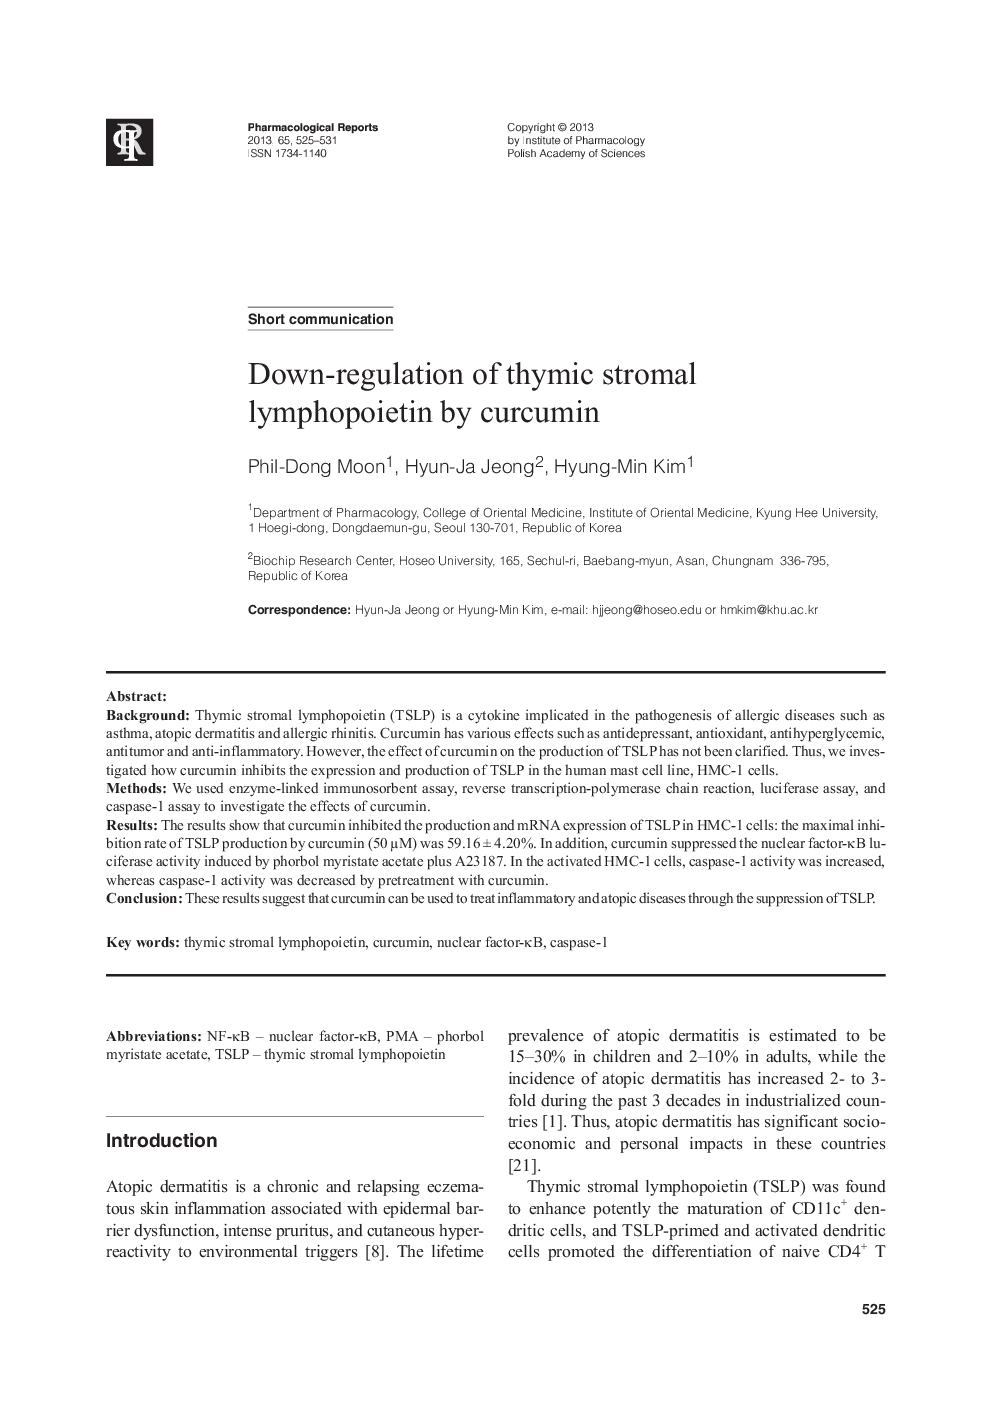 Down-regulation of thymic stromal lymphopoietin by curcumin